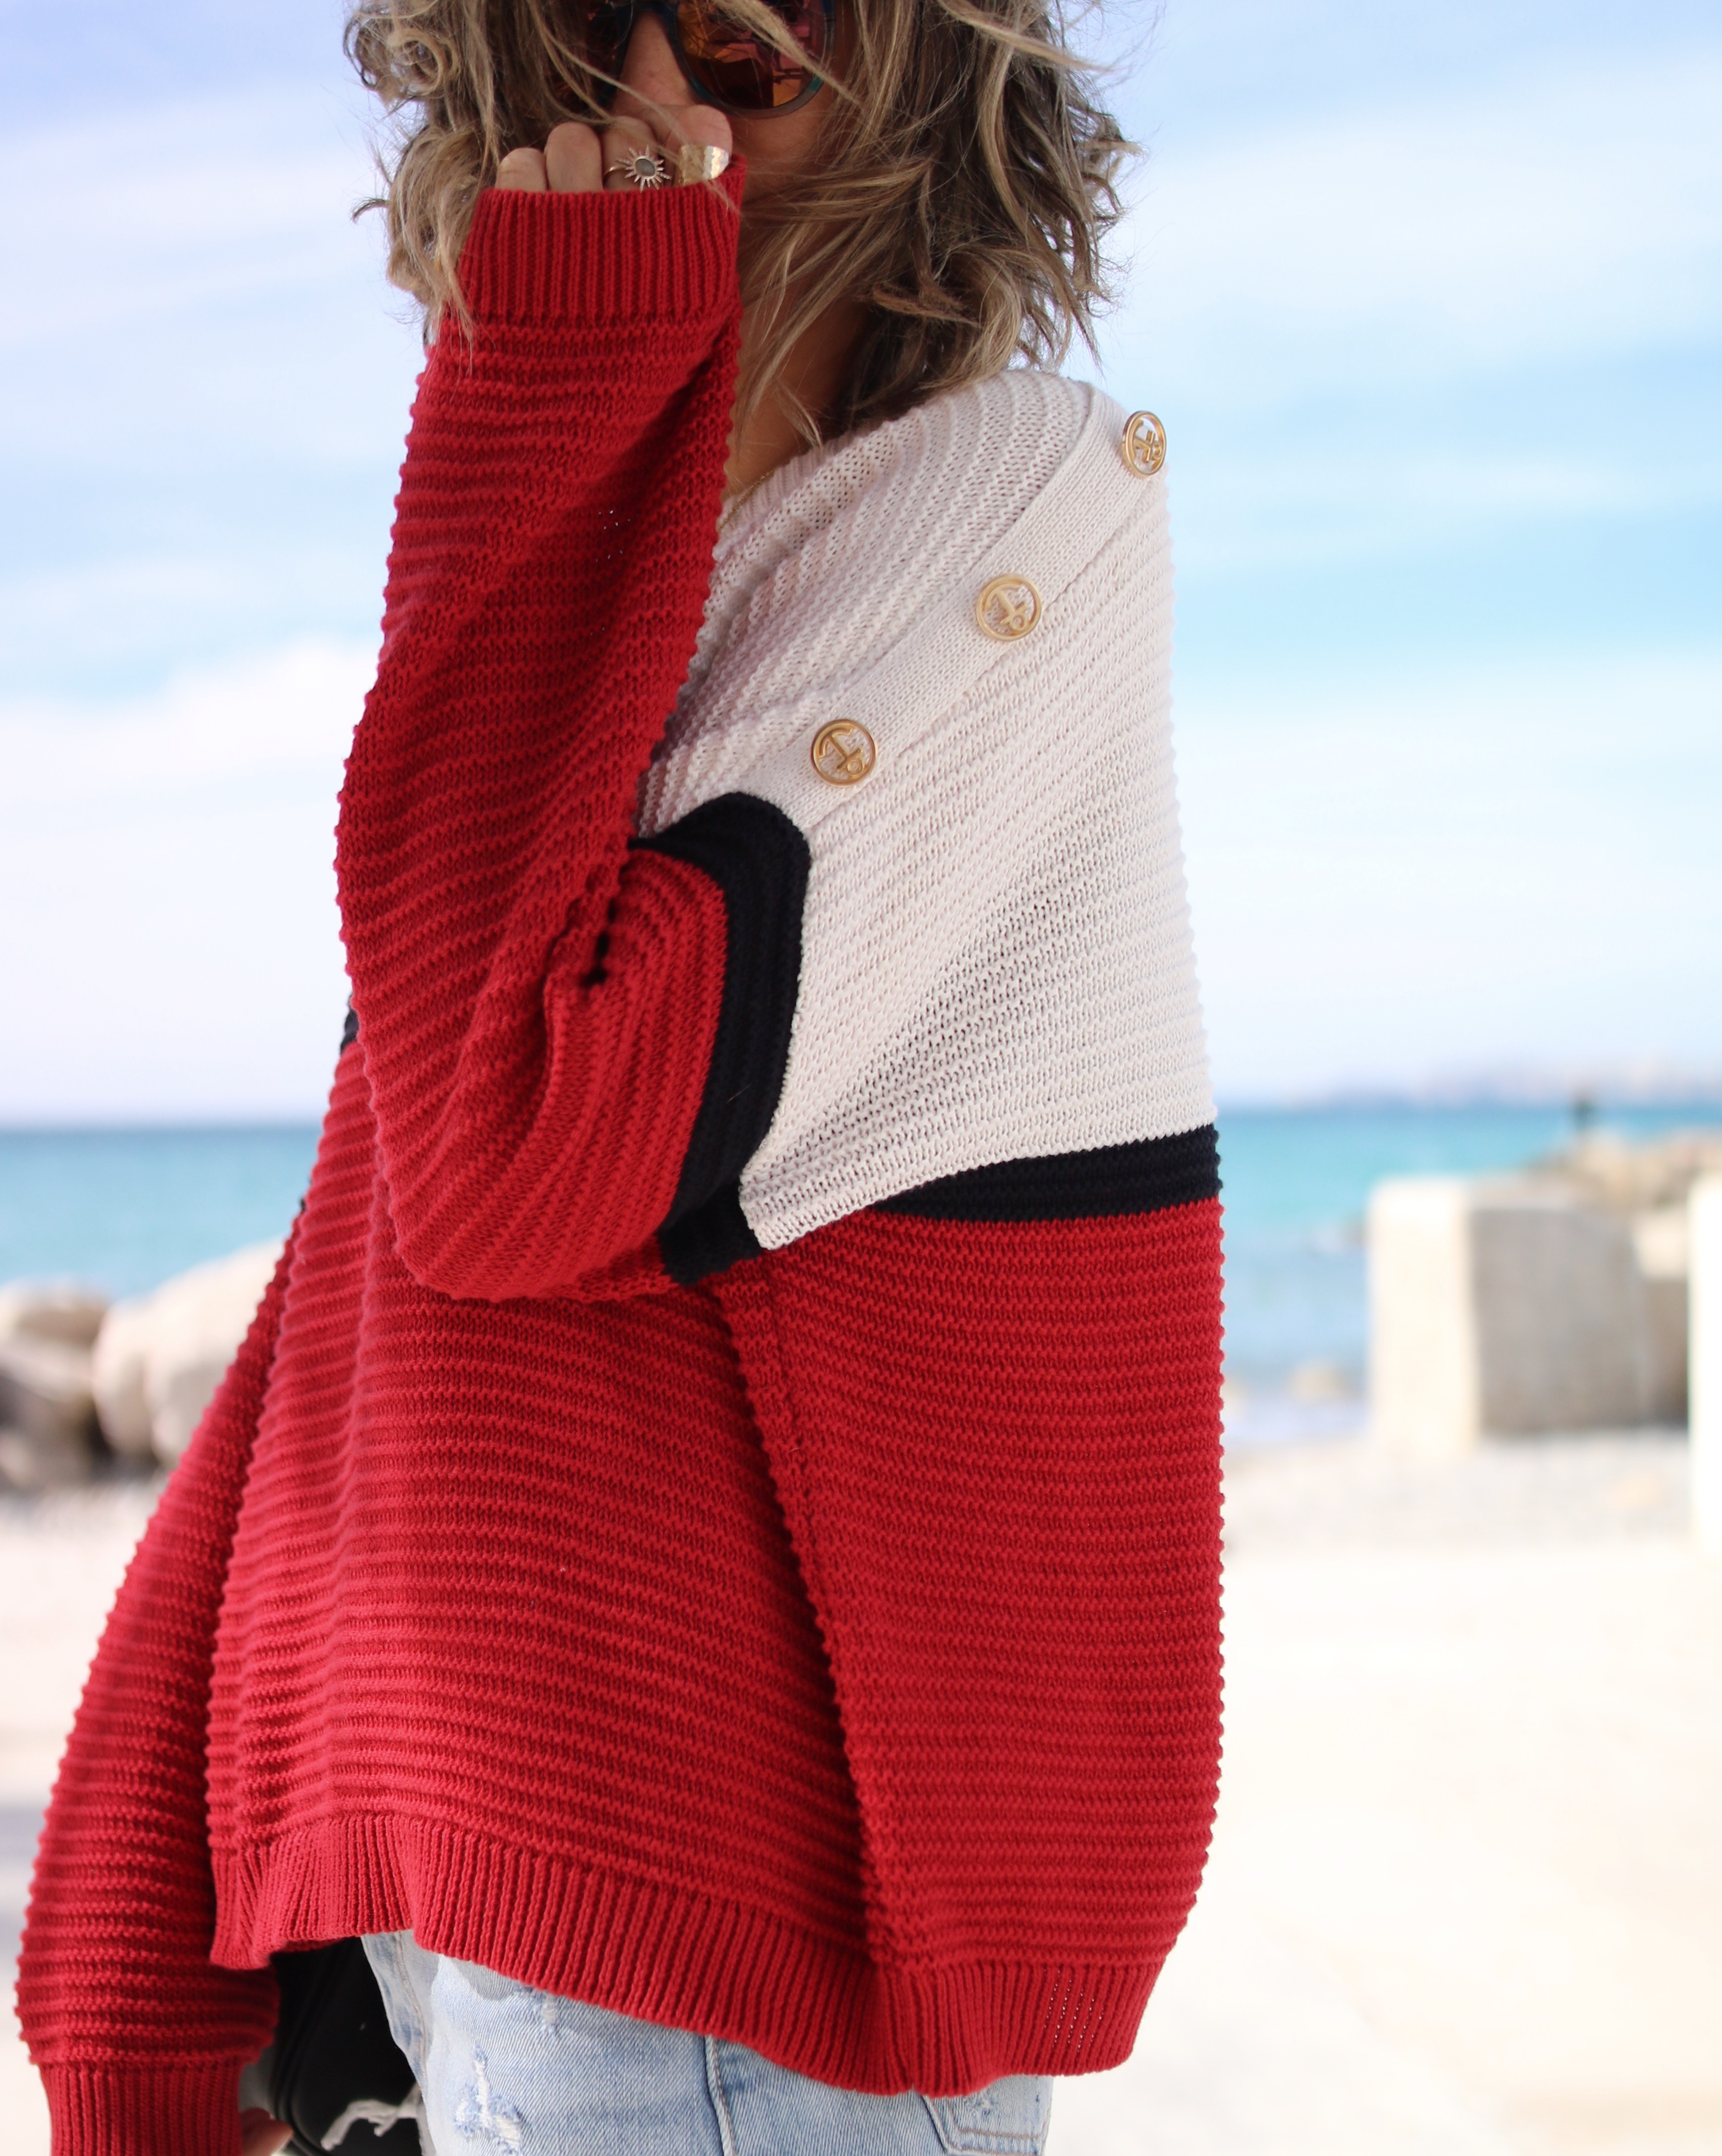 SAILOR GIRL - www.chonandchon.com - sailor weater, knit lover, knit style, denim skirt